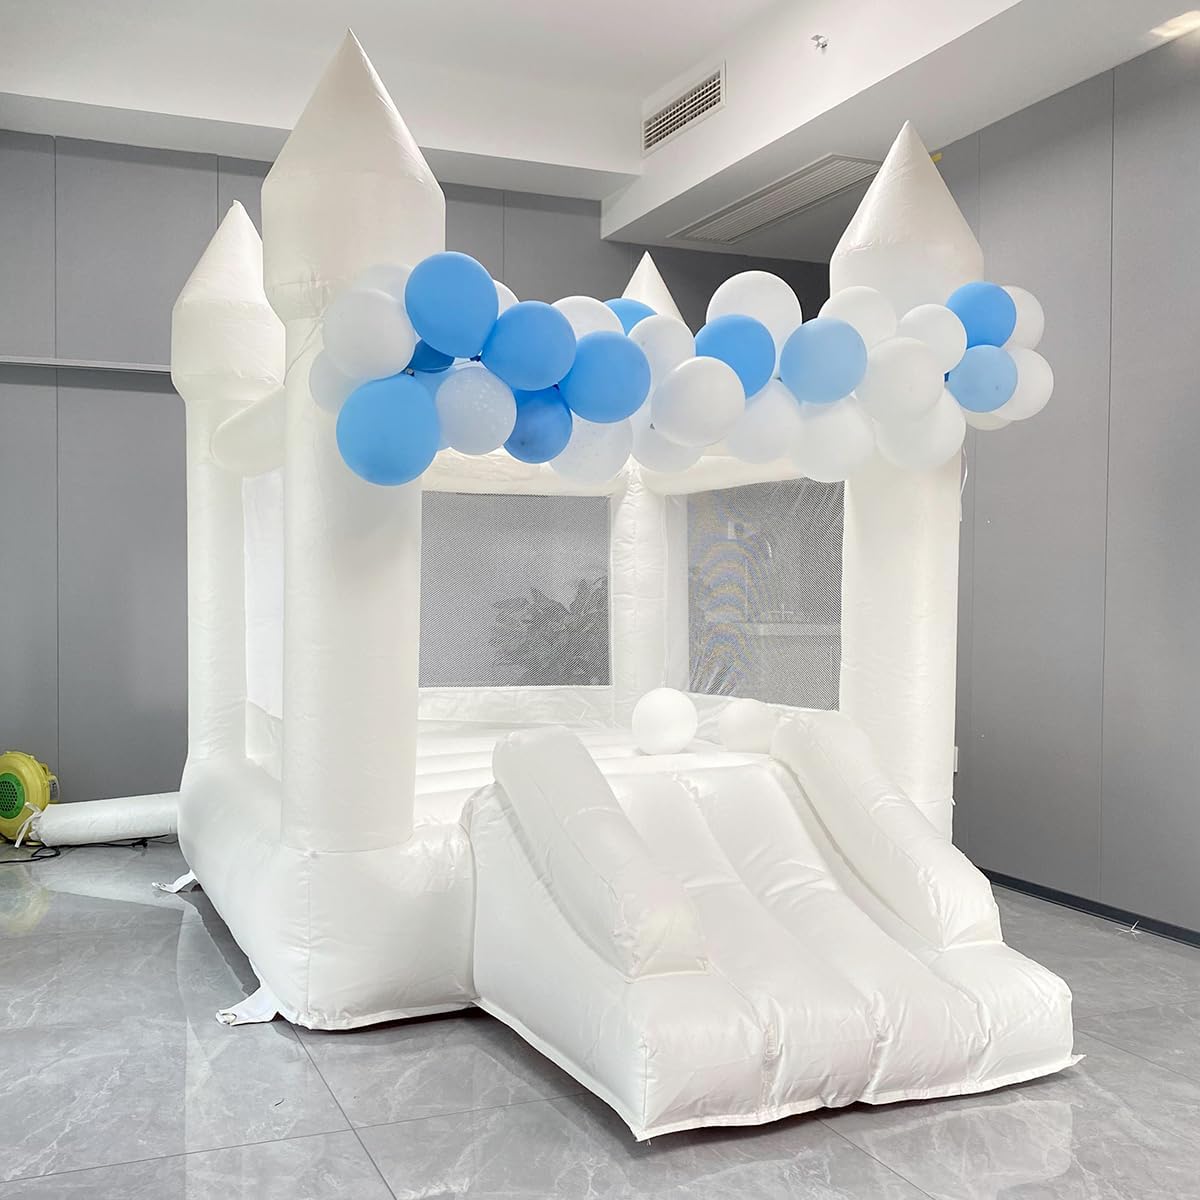 White Bounce House With Slide Family Backyard Bouncy Castle Idea For Kids